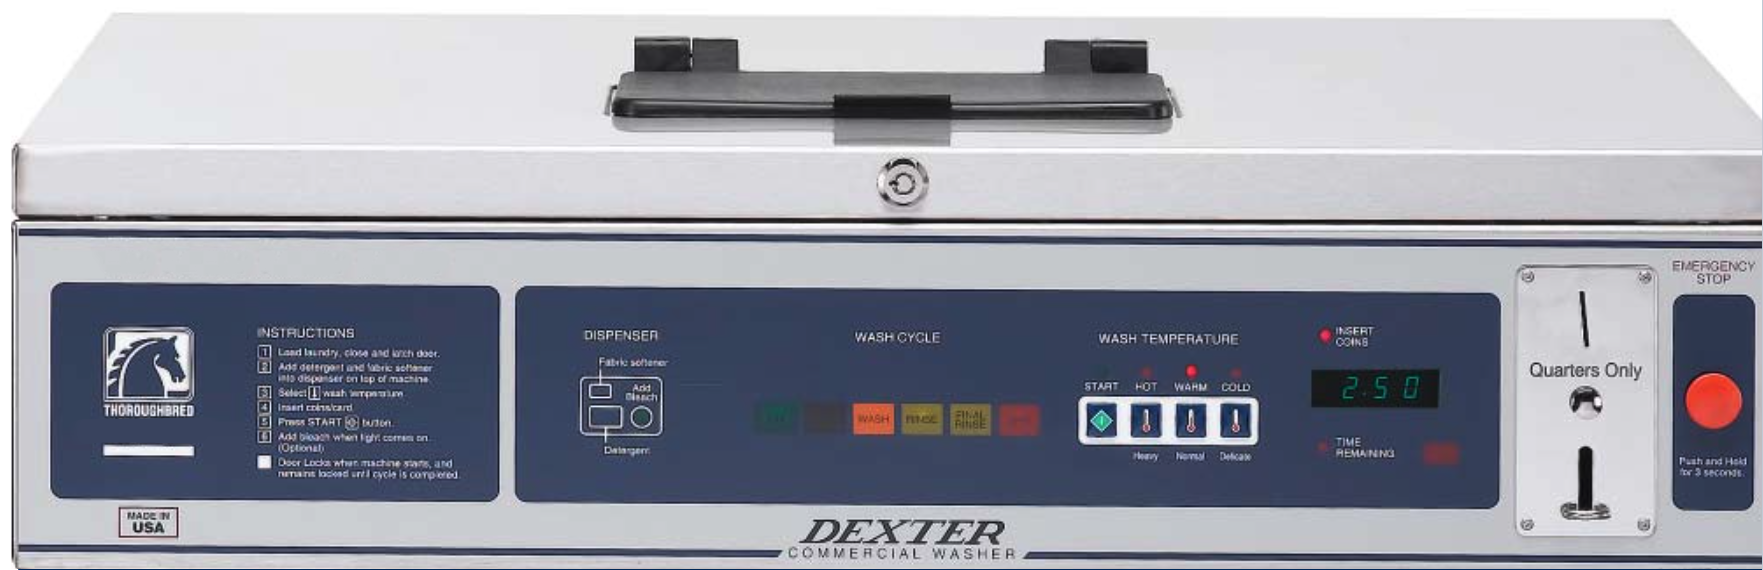 Generic Dexter washing machine top interface